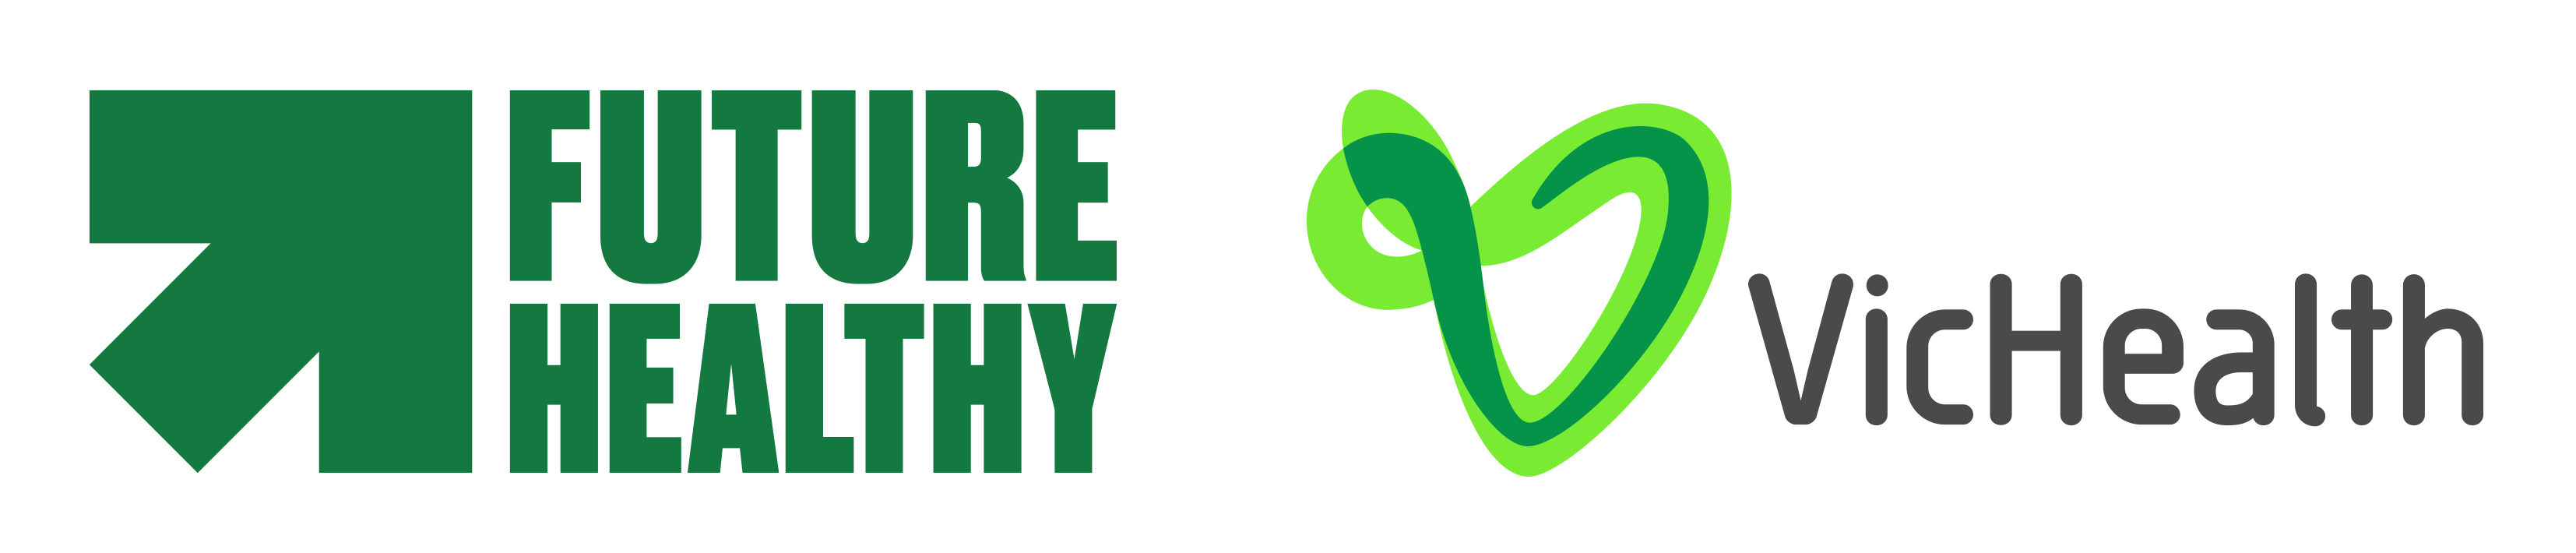 Future Healthy logo with VicHealth logo